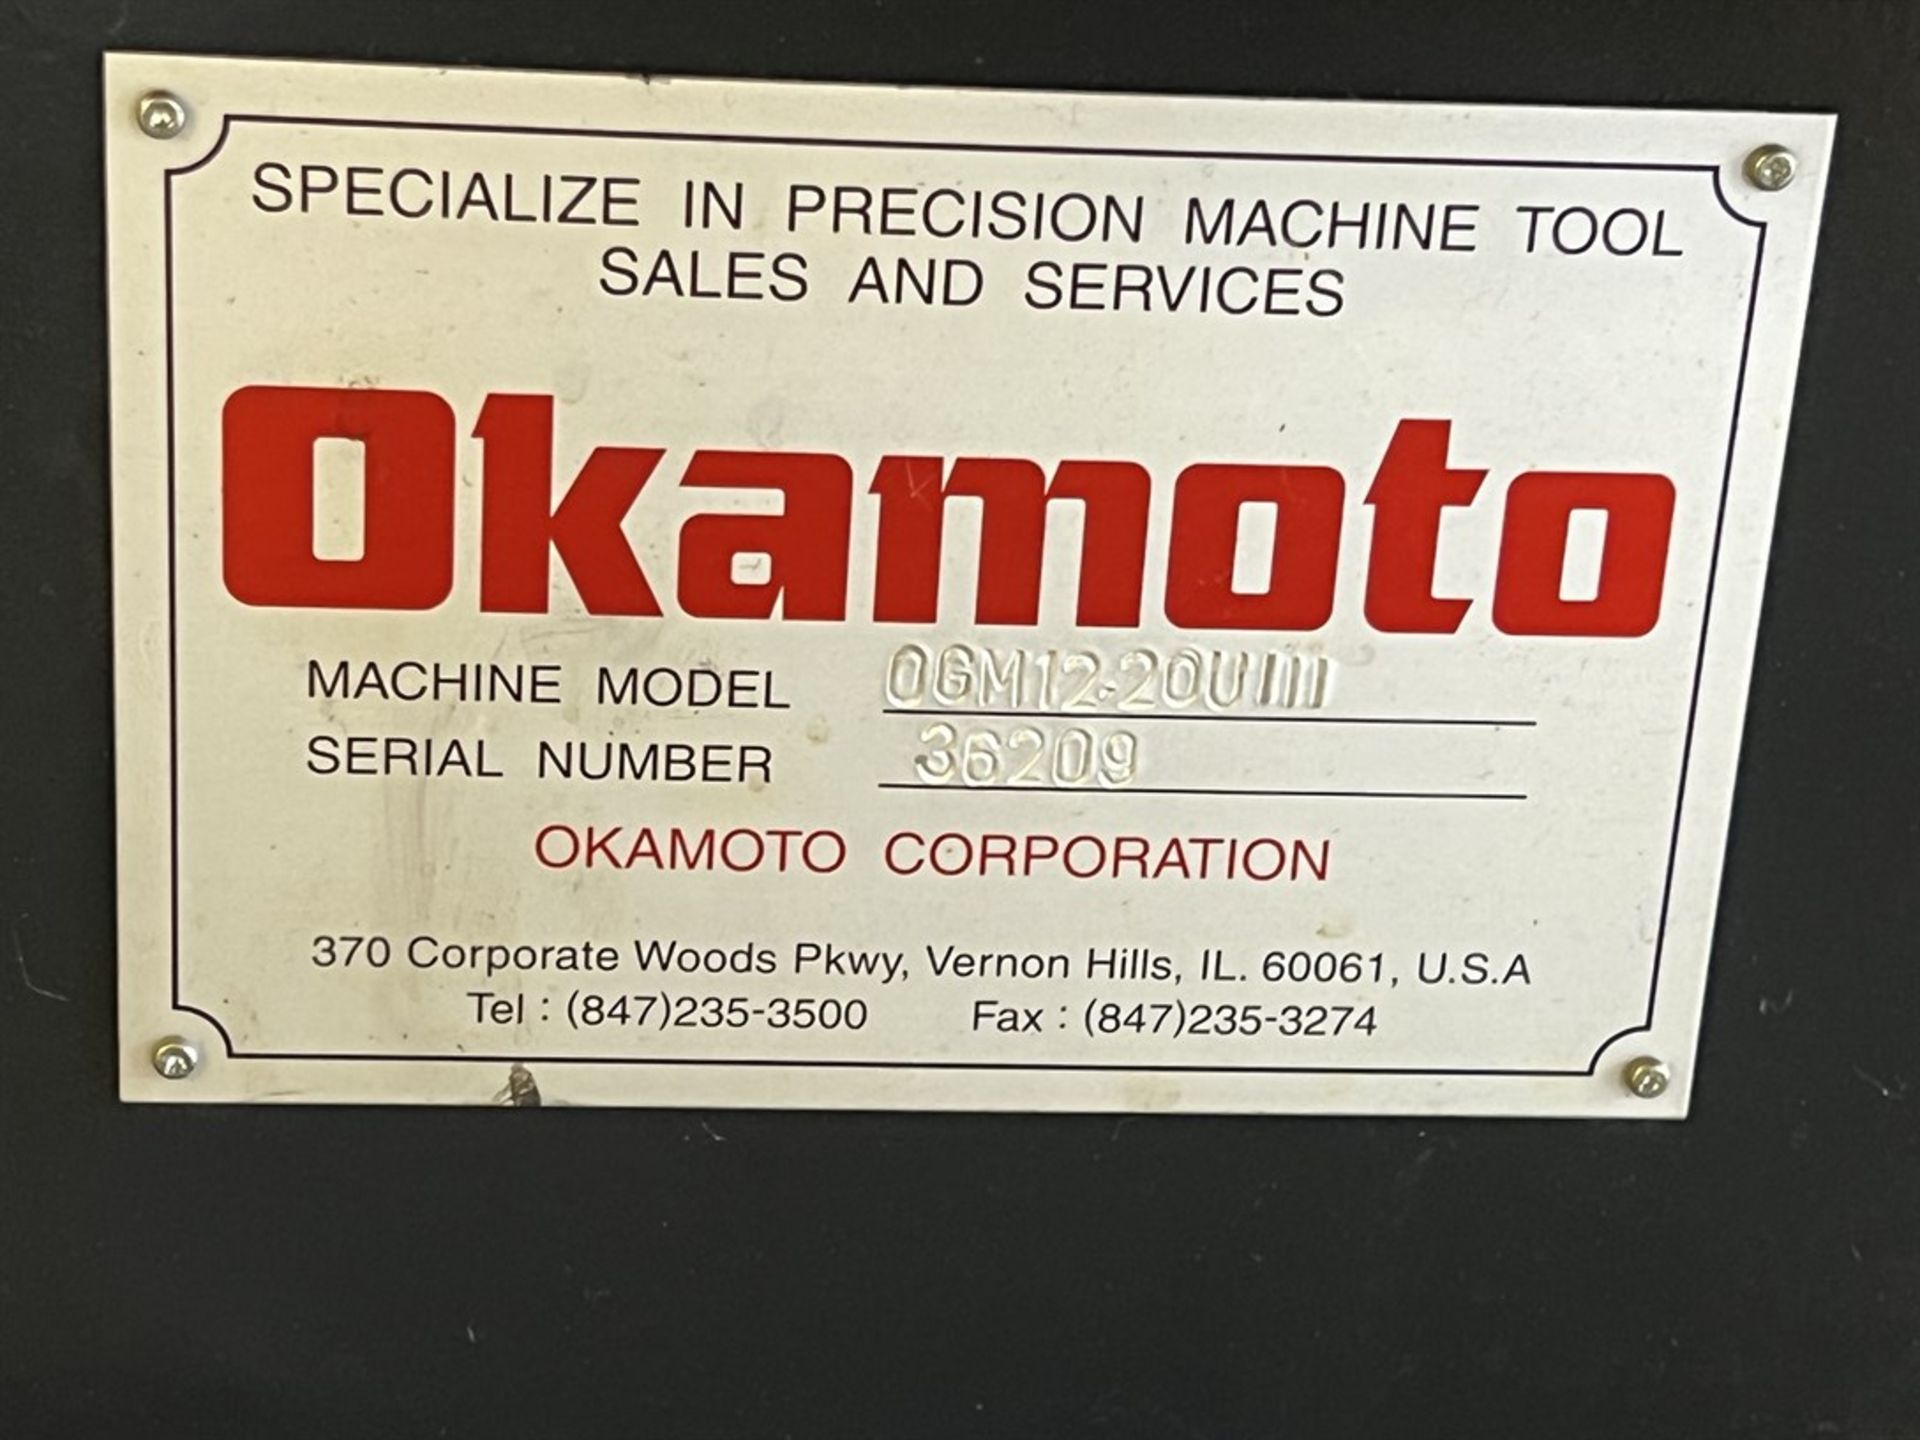 2016 OKAMOTO OGM 1220 UIII CNC Universal Grinder, s/n 36209, Okamoto Precision Control, 12" Swing, - Image 12 of 14